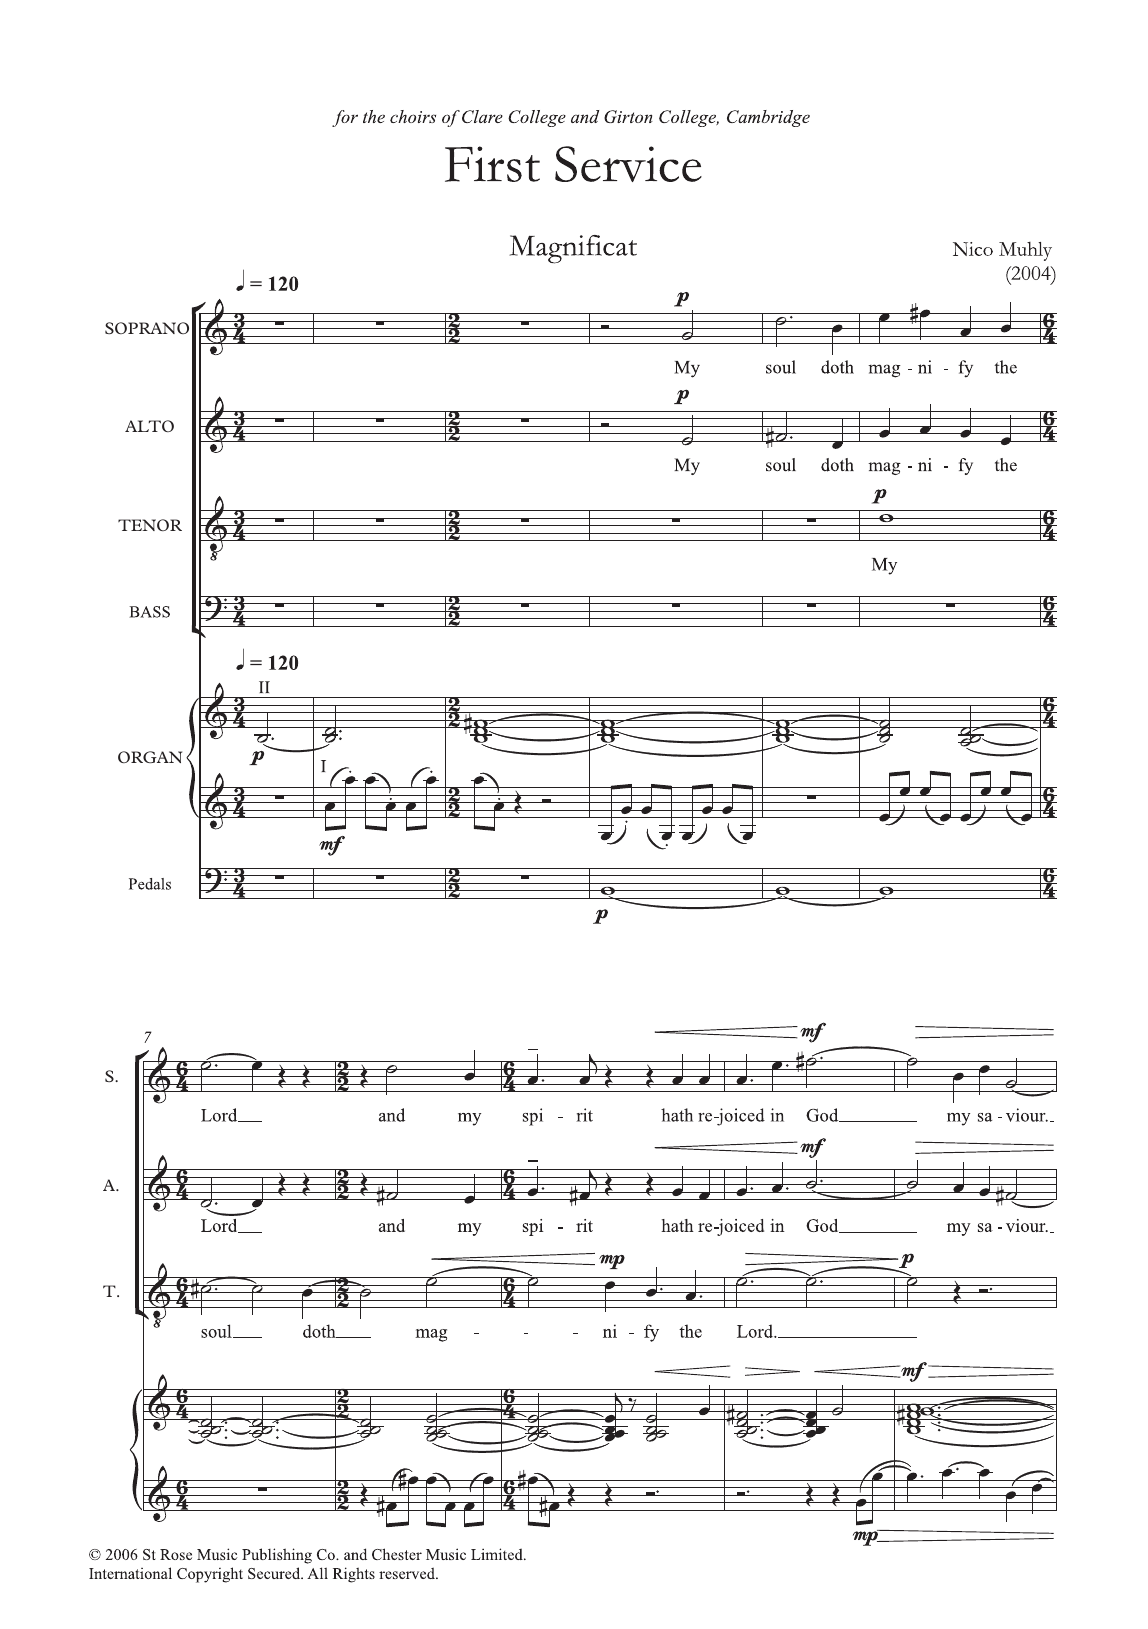 First Service (Magnificat and Nunc Dimittis) (SATB Choir) von Nico Muhly